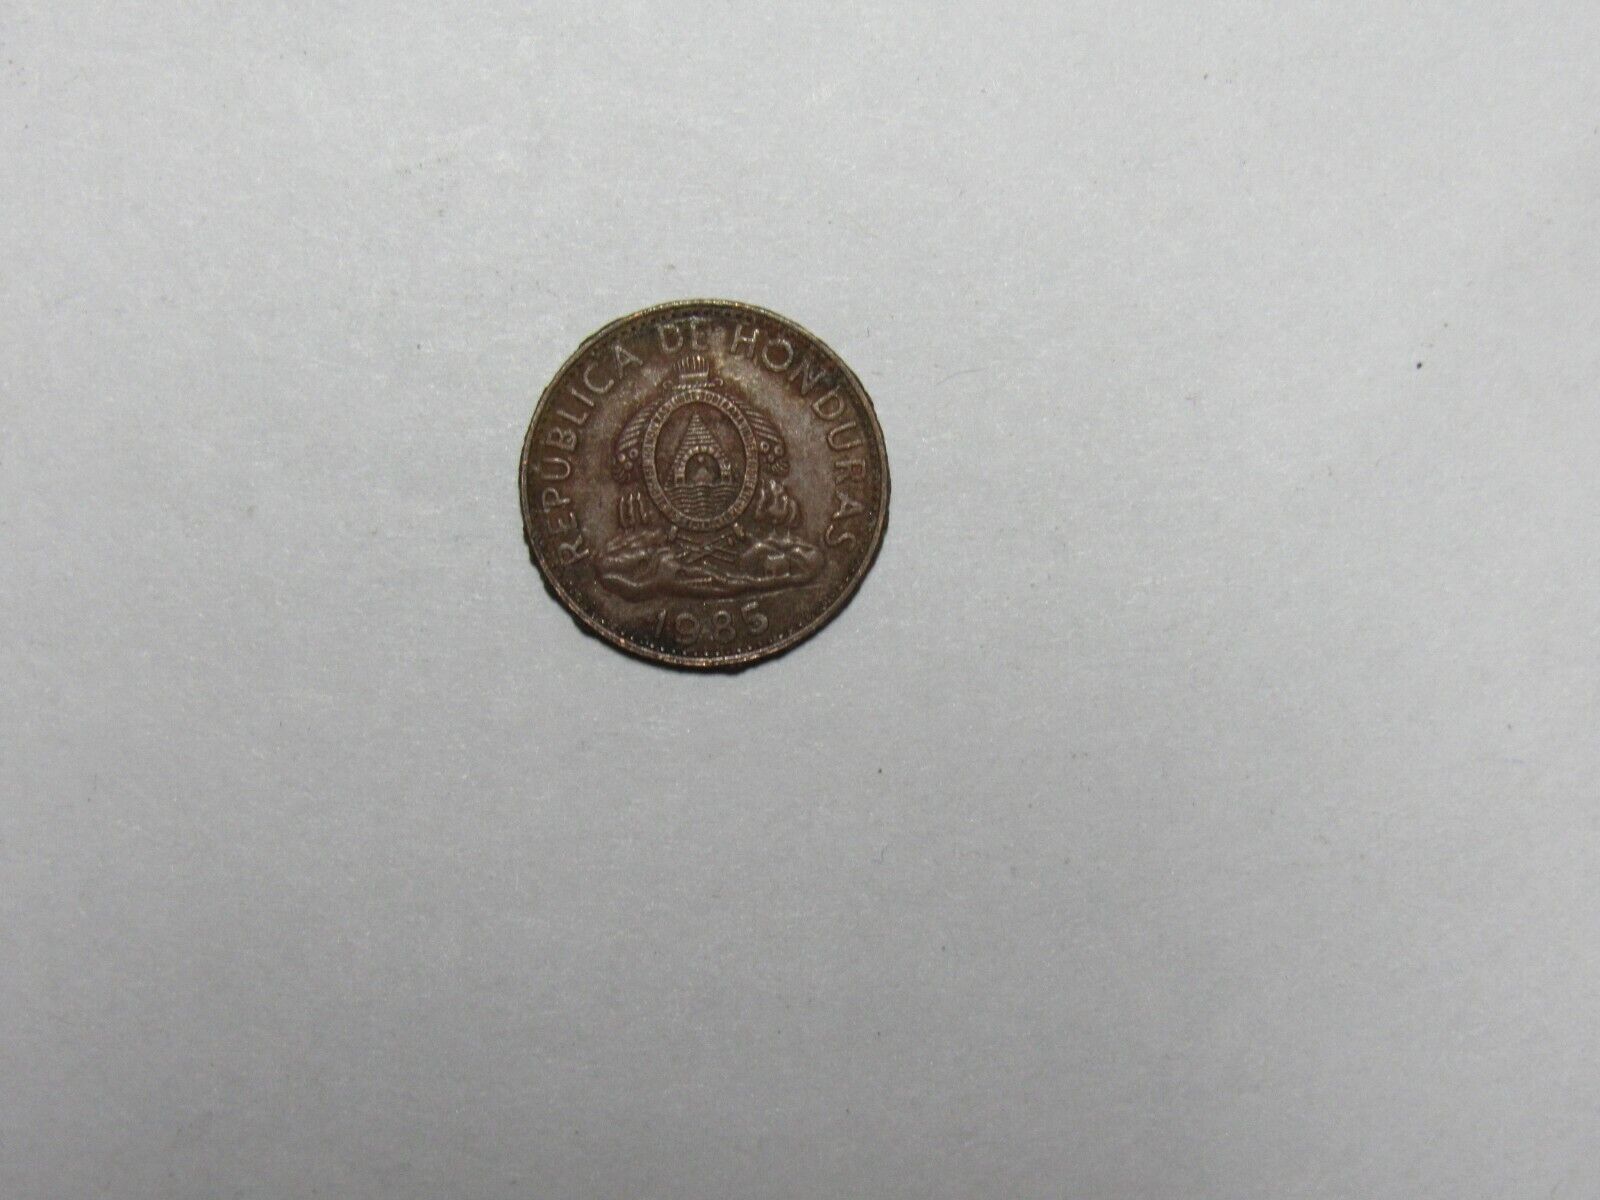 Honduras Coin - 1985 1 Centavo - Circulated, Discolored, Rim Dings